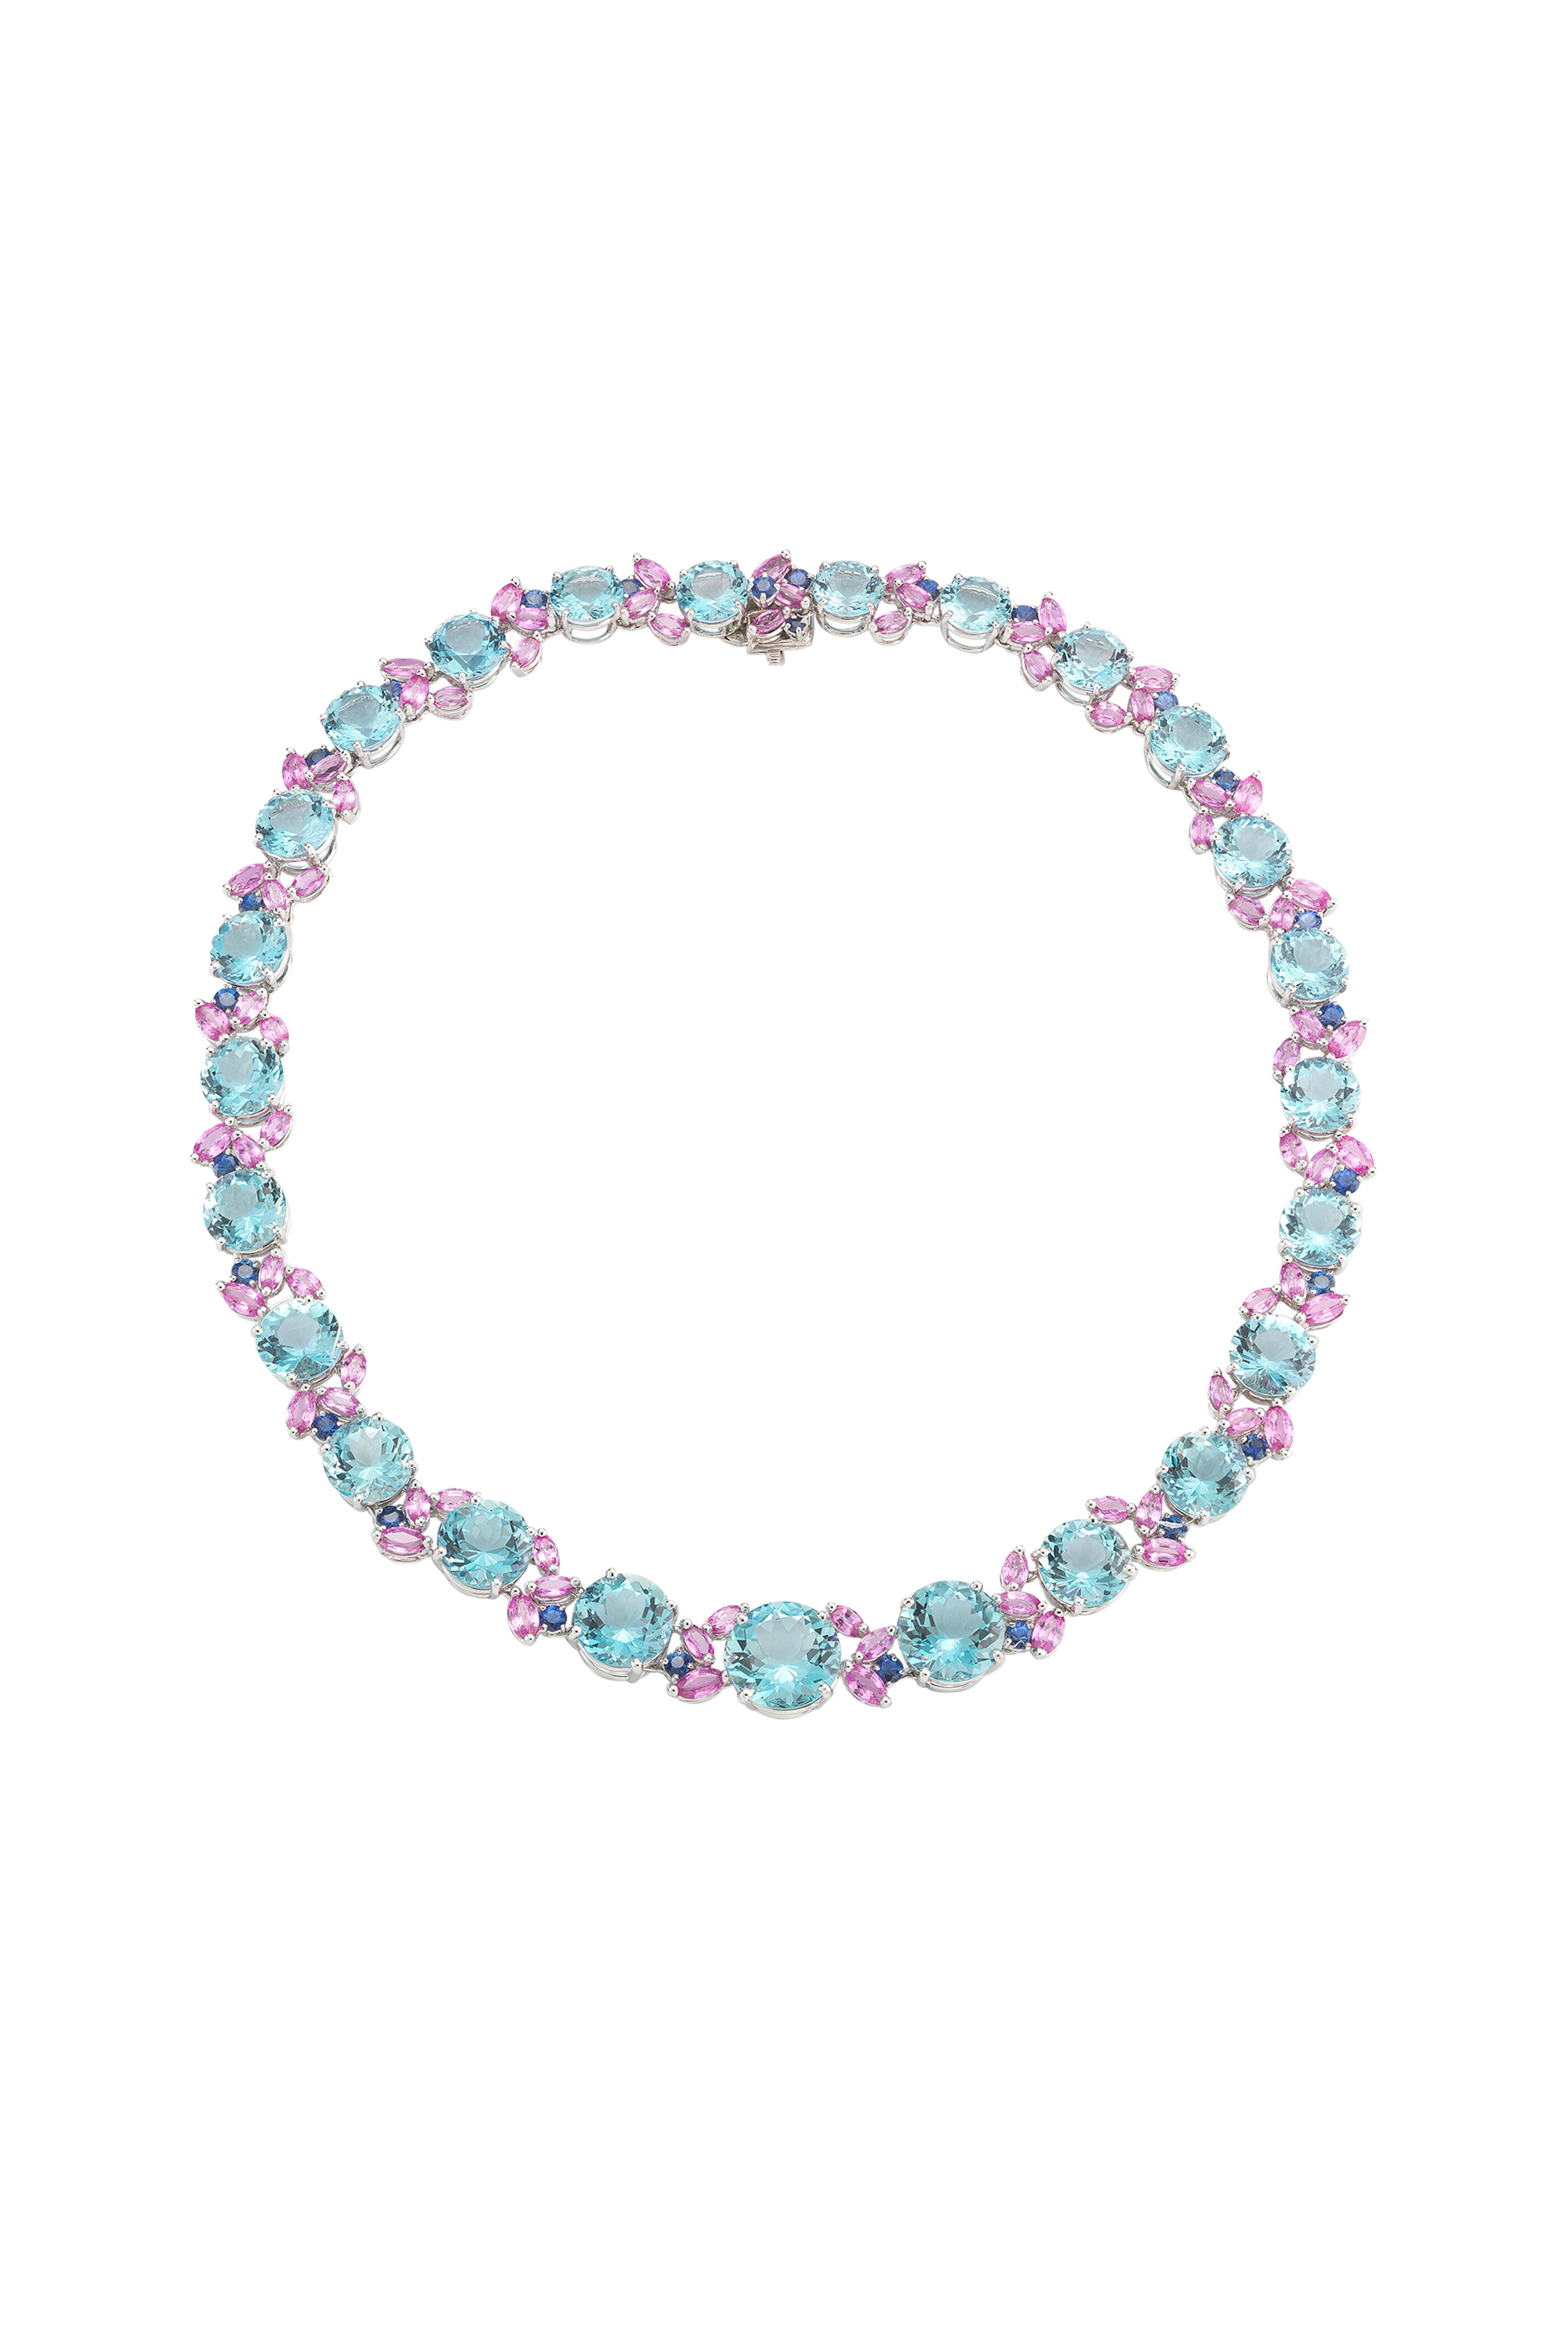 Oscar Heyman - Platinum Aquamarine & Sapphire Necklace